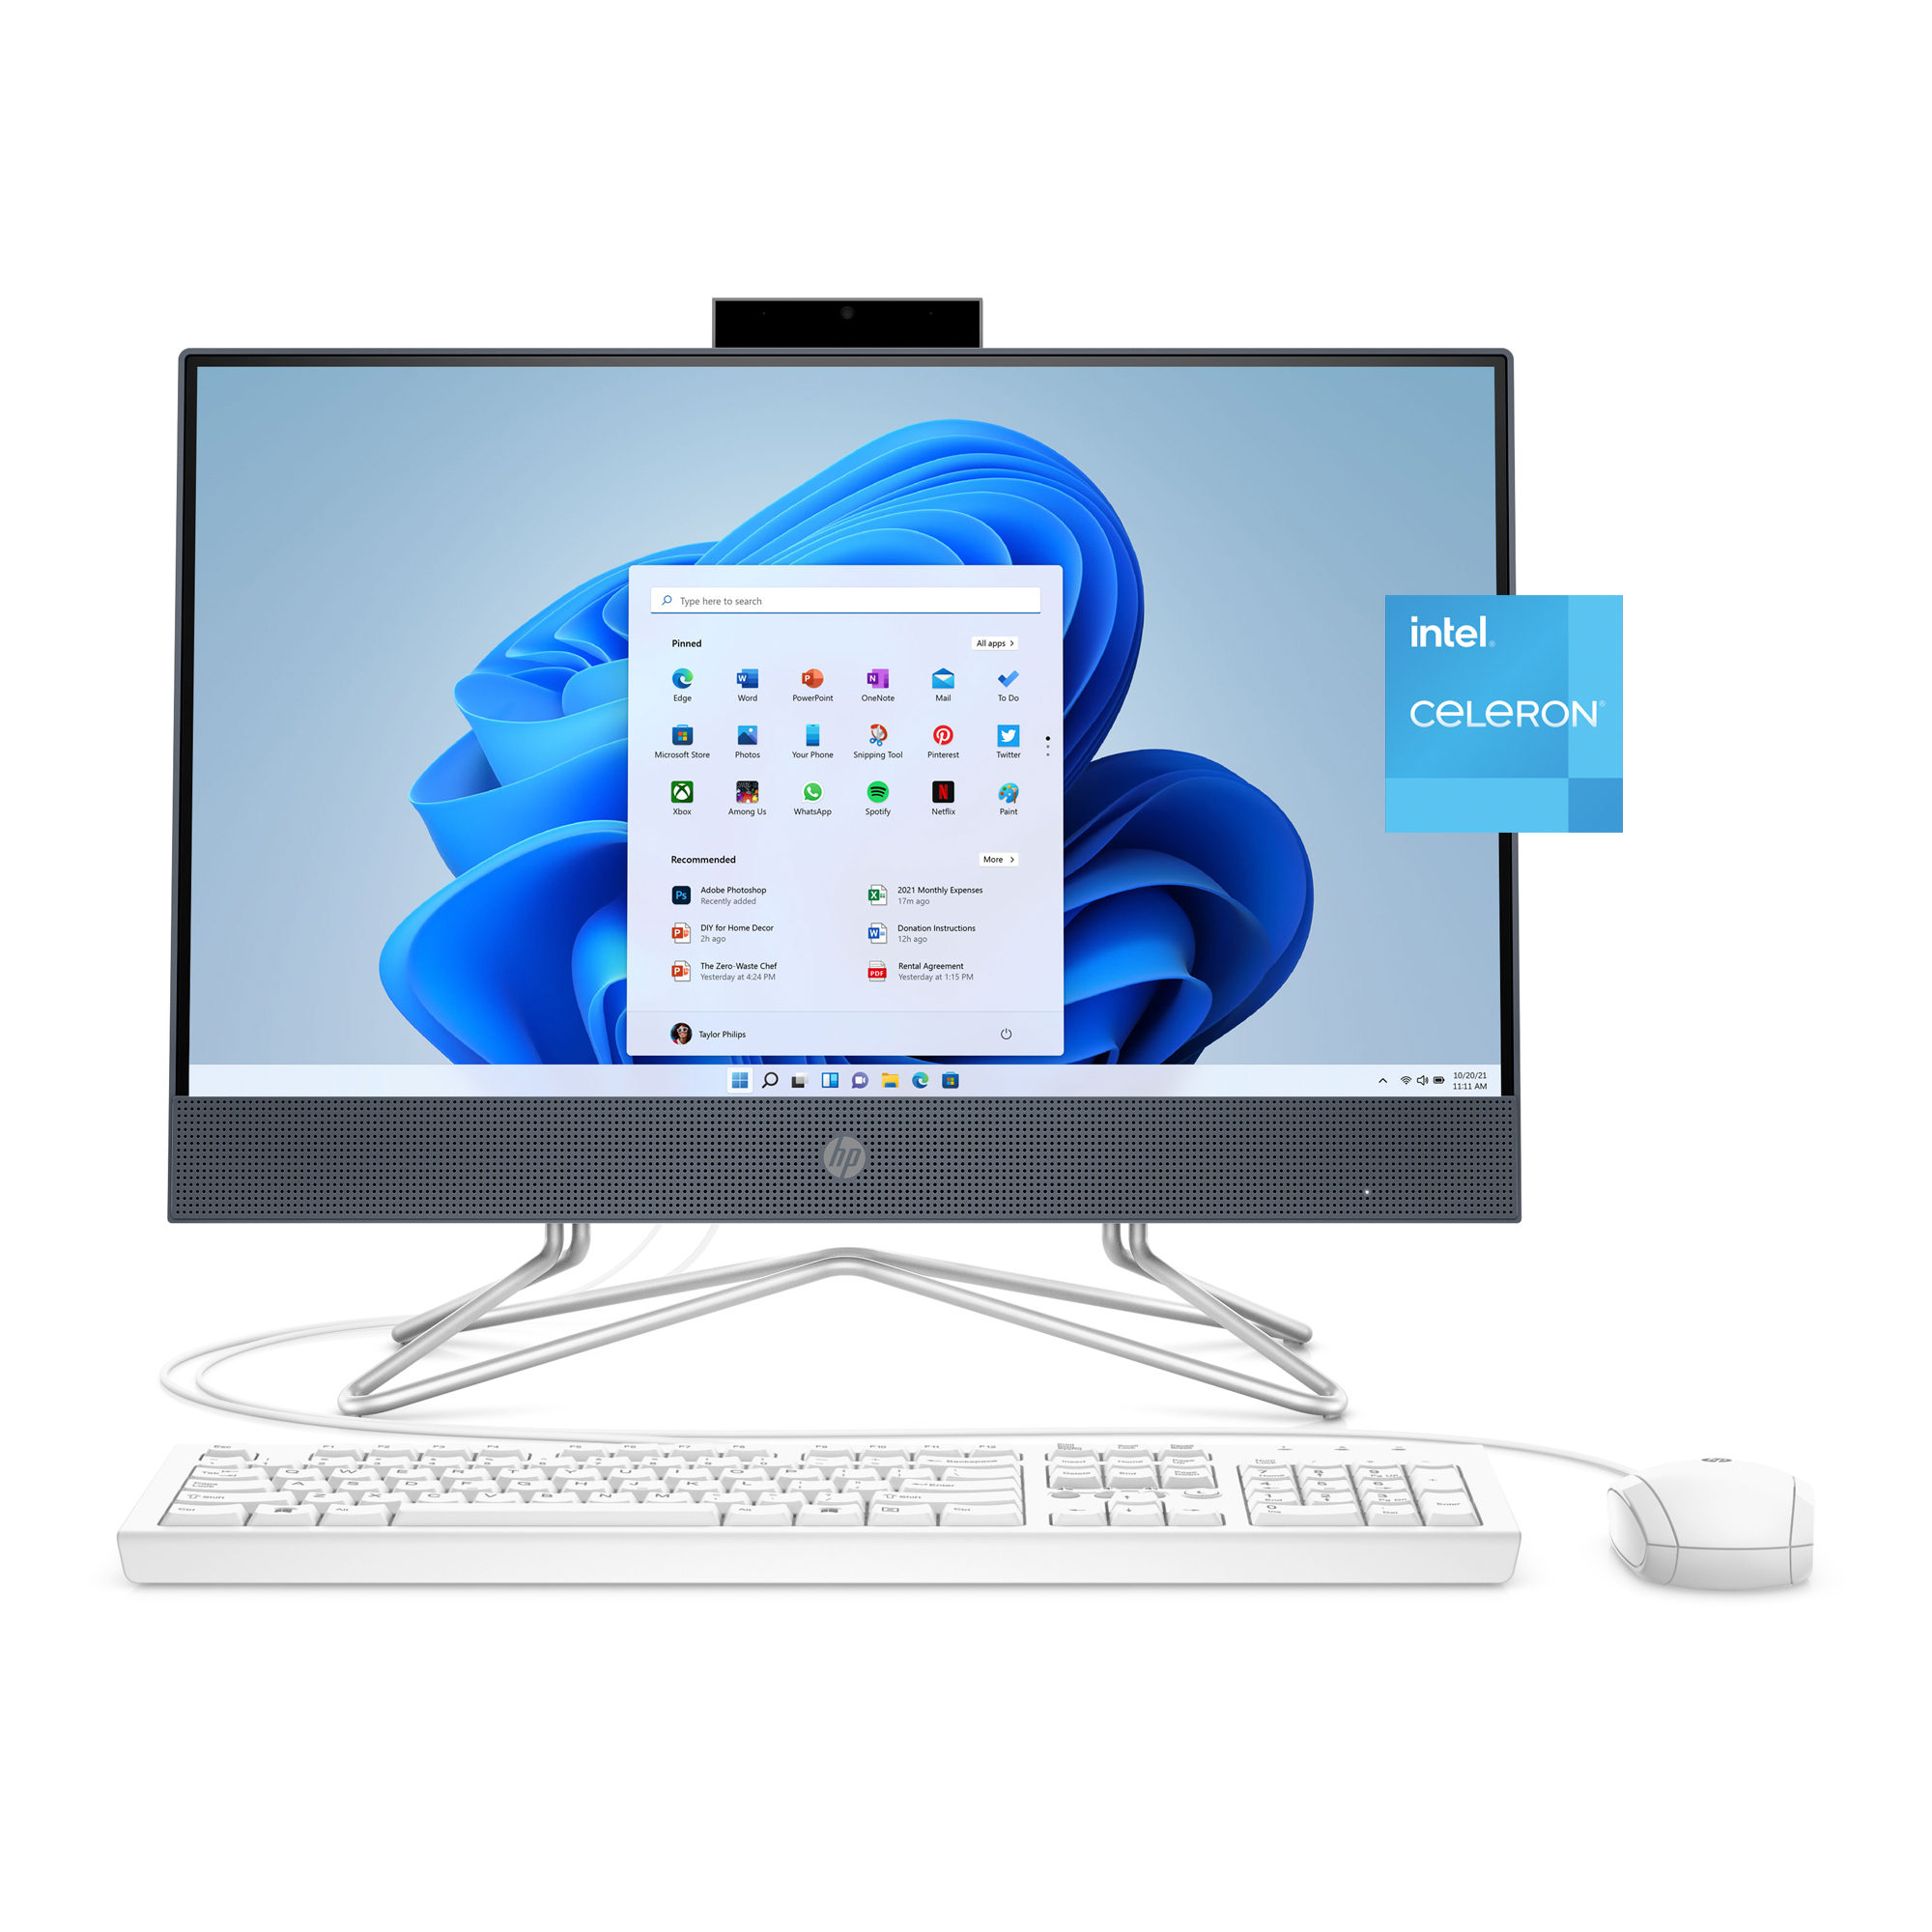 HP All-in-One Desktop 22", Intel Celeron G5900T, 4GB RAM, 256GB SSD, Blue, Windows 11 Home, 22-df0013w - image 1 of 2